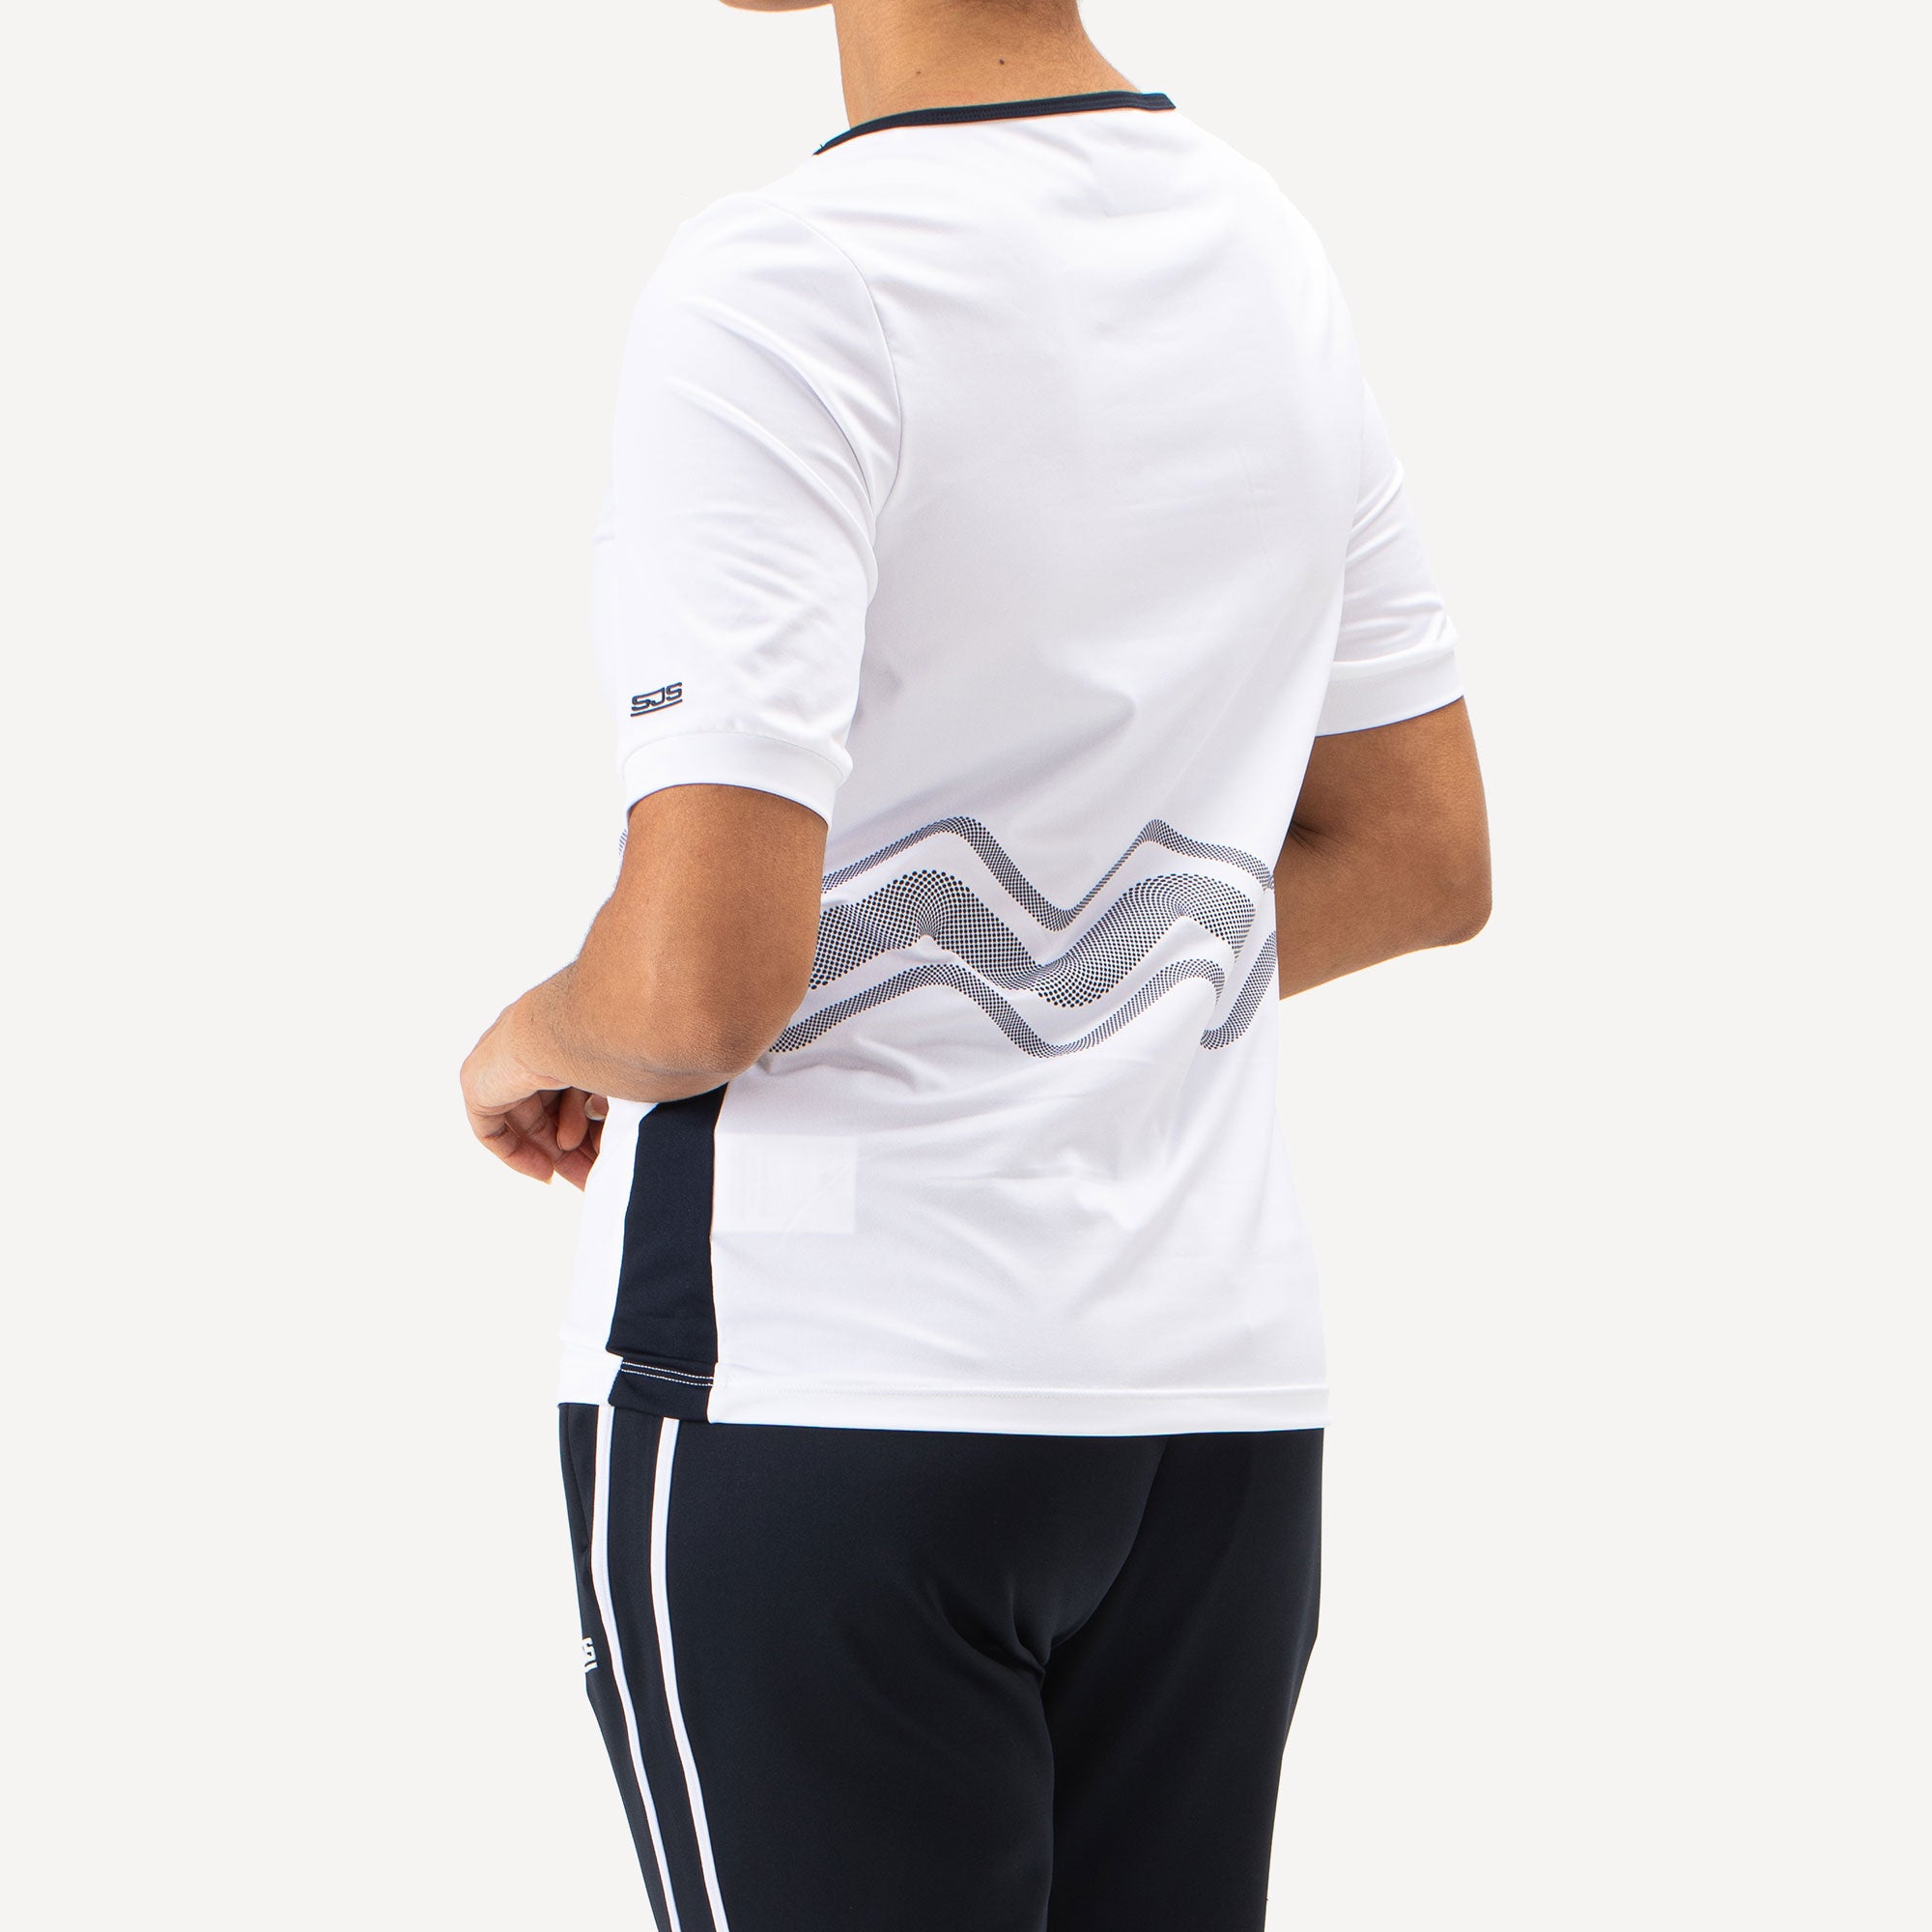 Sjeng Sports Ise Women's Tennis Shirt - White (2)